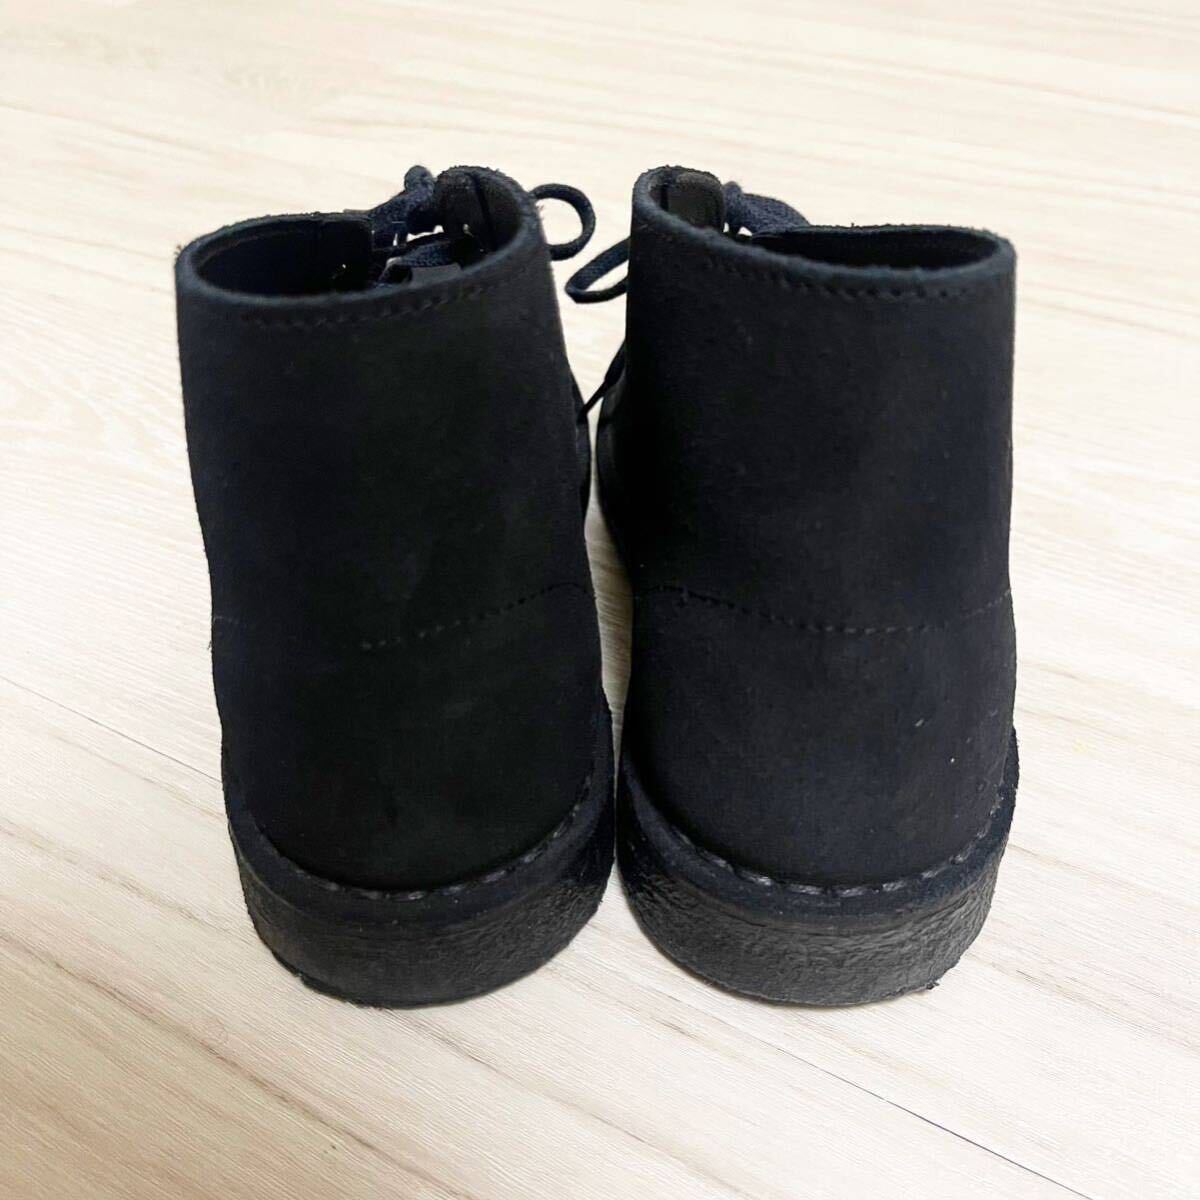 CLARKS ORIGINALS クラークス オリジナルズ DESERT BOOTS デザート ブーツ シューズ 靴 ブラック スエー UK51/2 約24.5cm 相当 状態良好_画像4